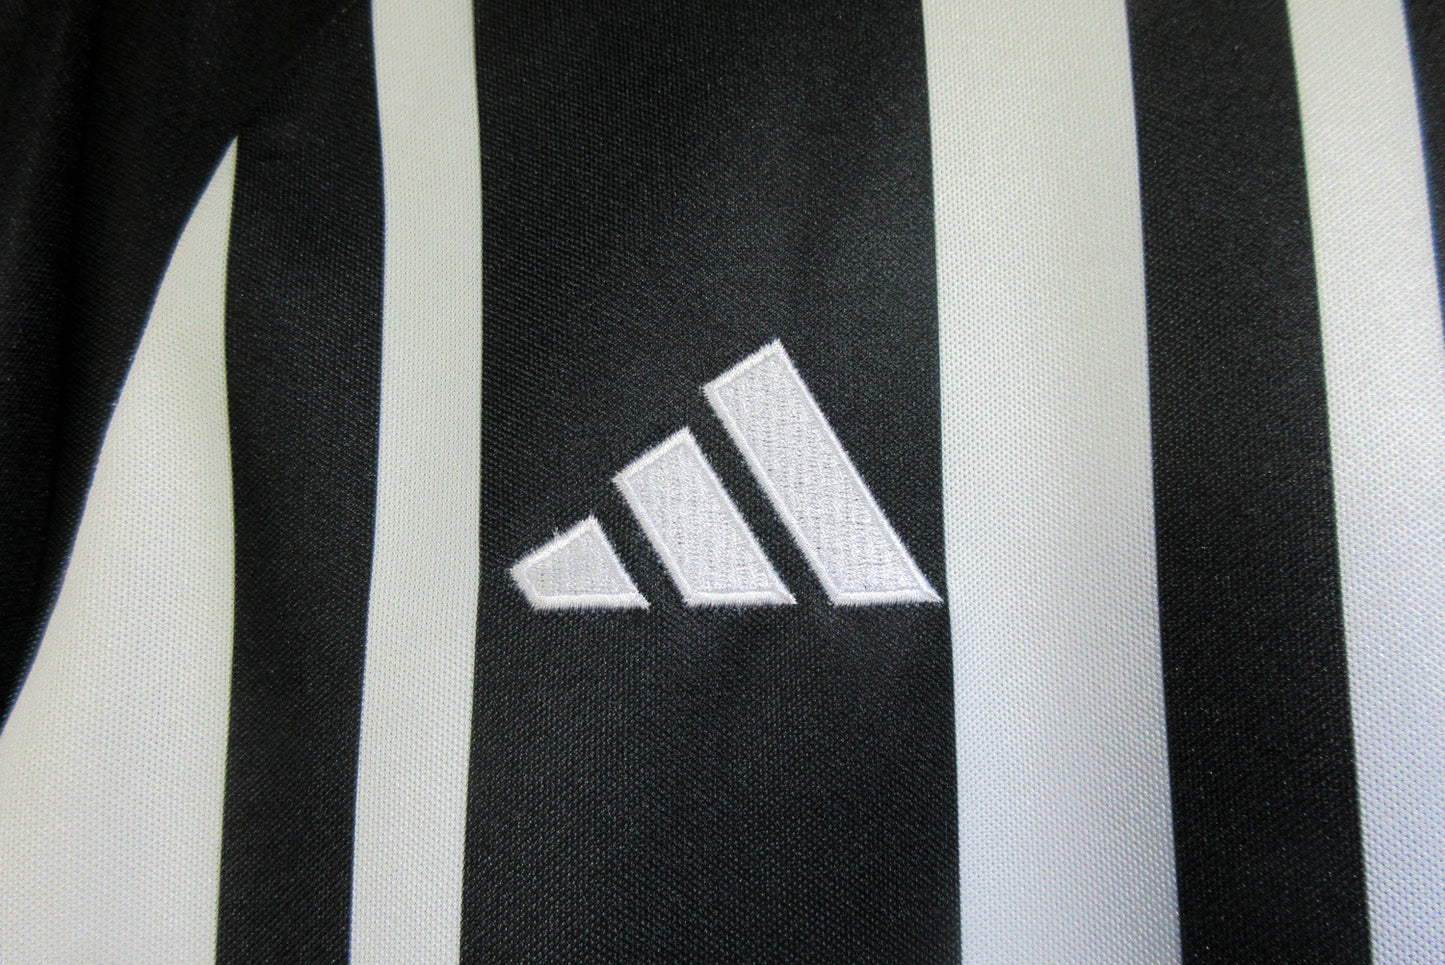 Atletico Mineiro 23/24 Home Kit - Fan Version - Logo